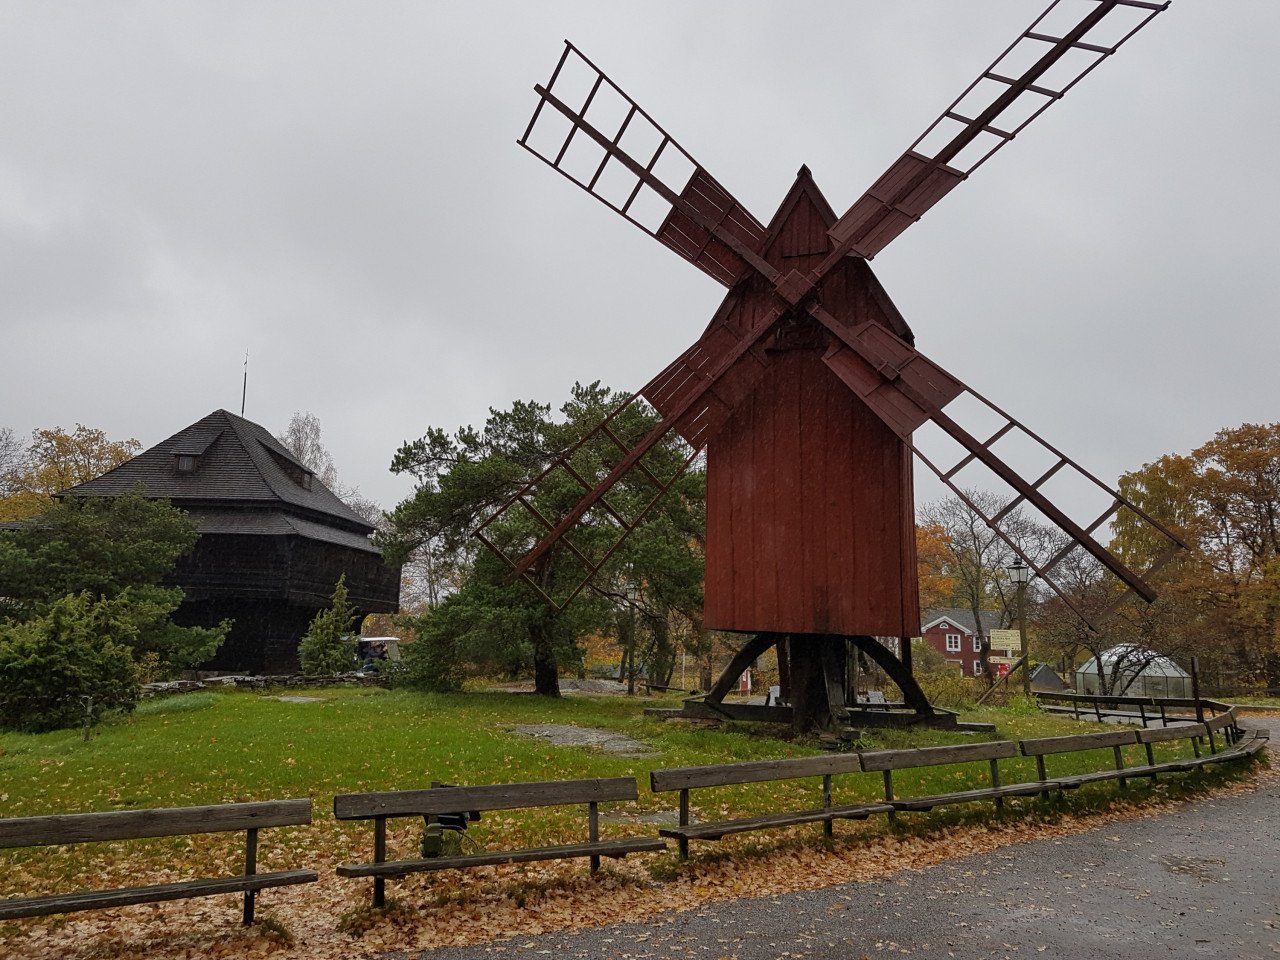 Skansen, sebuah taman dan muzium terbuka yang mempamerkan bangunan tradisional dari seluruh Sweden